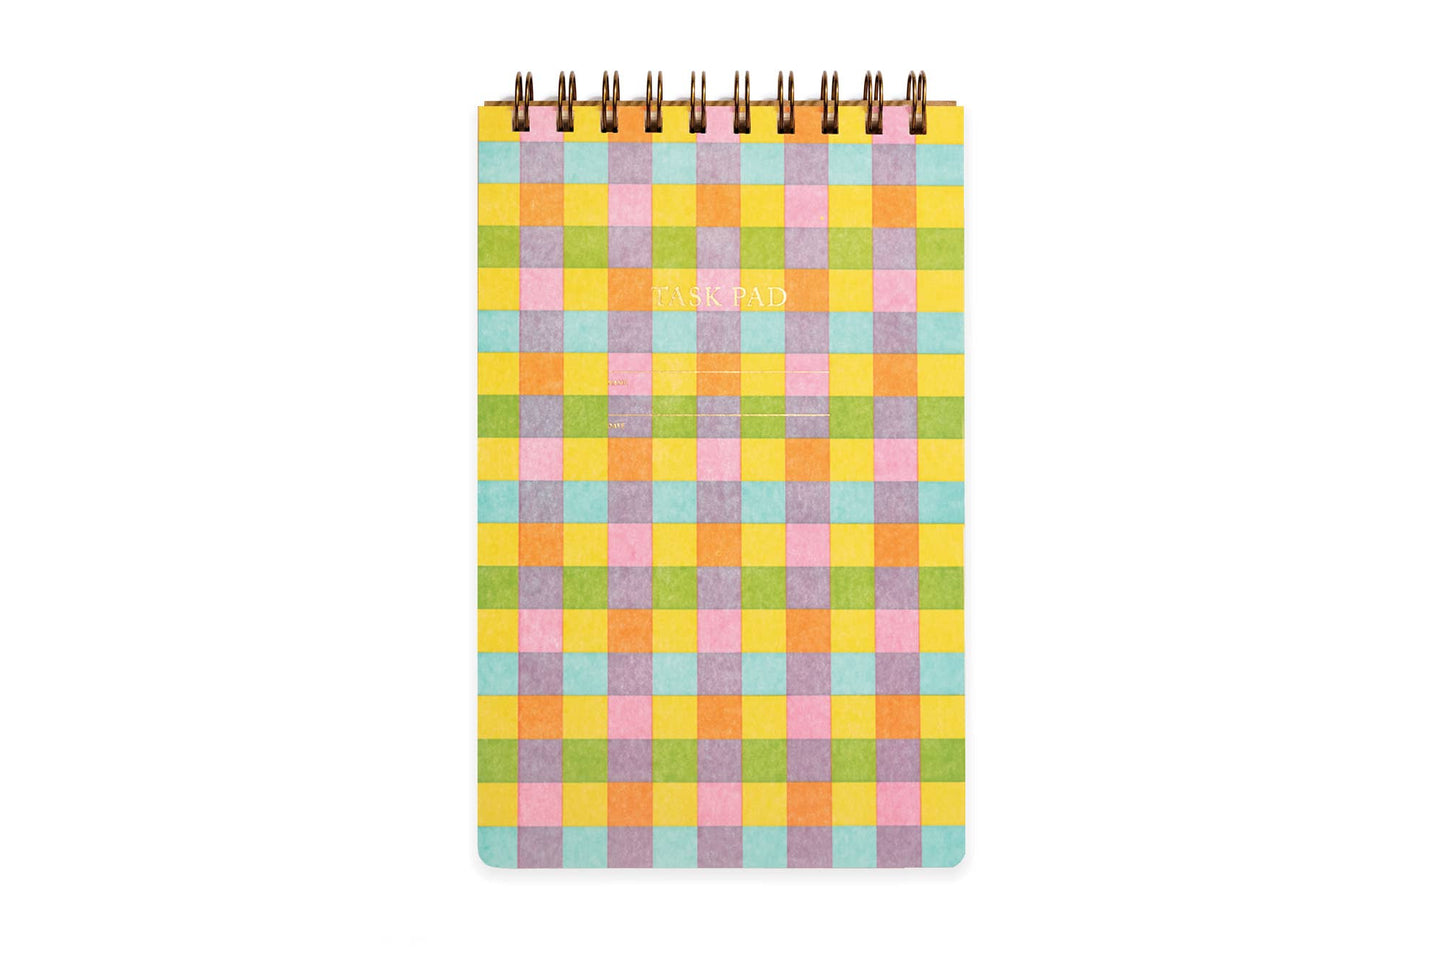 Shorthand Press - Task Pad Notebook - Plaid